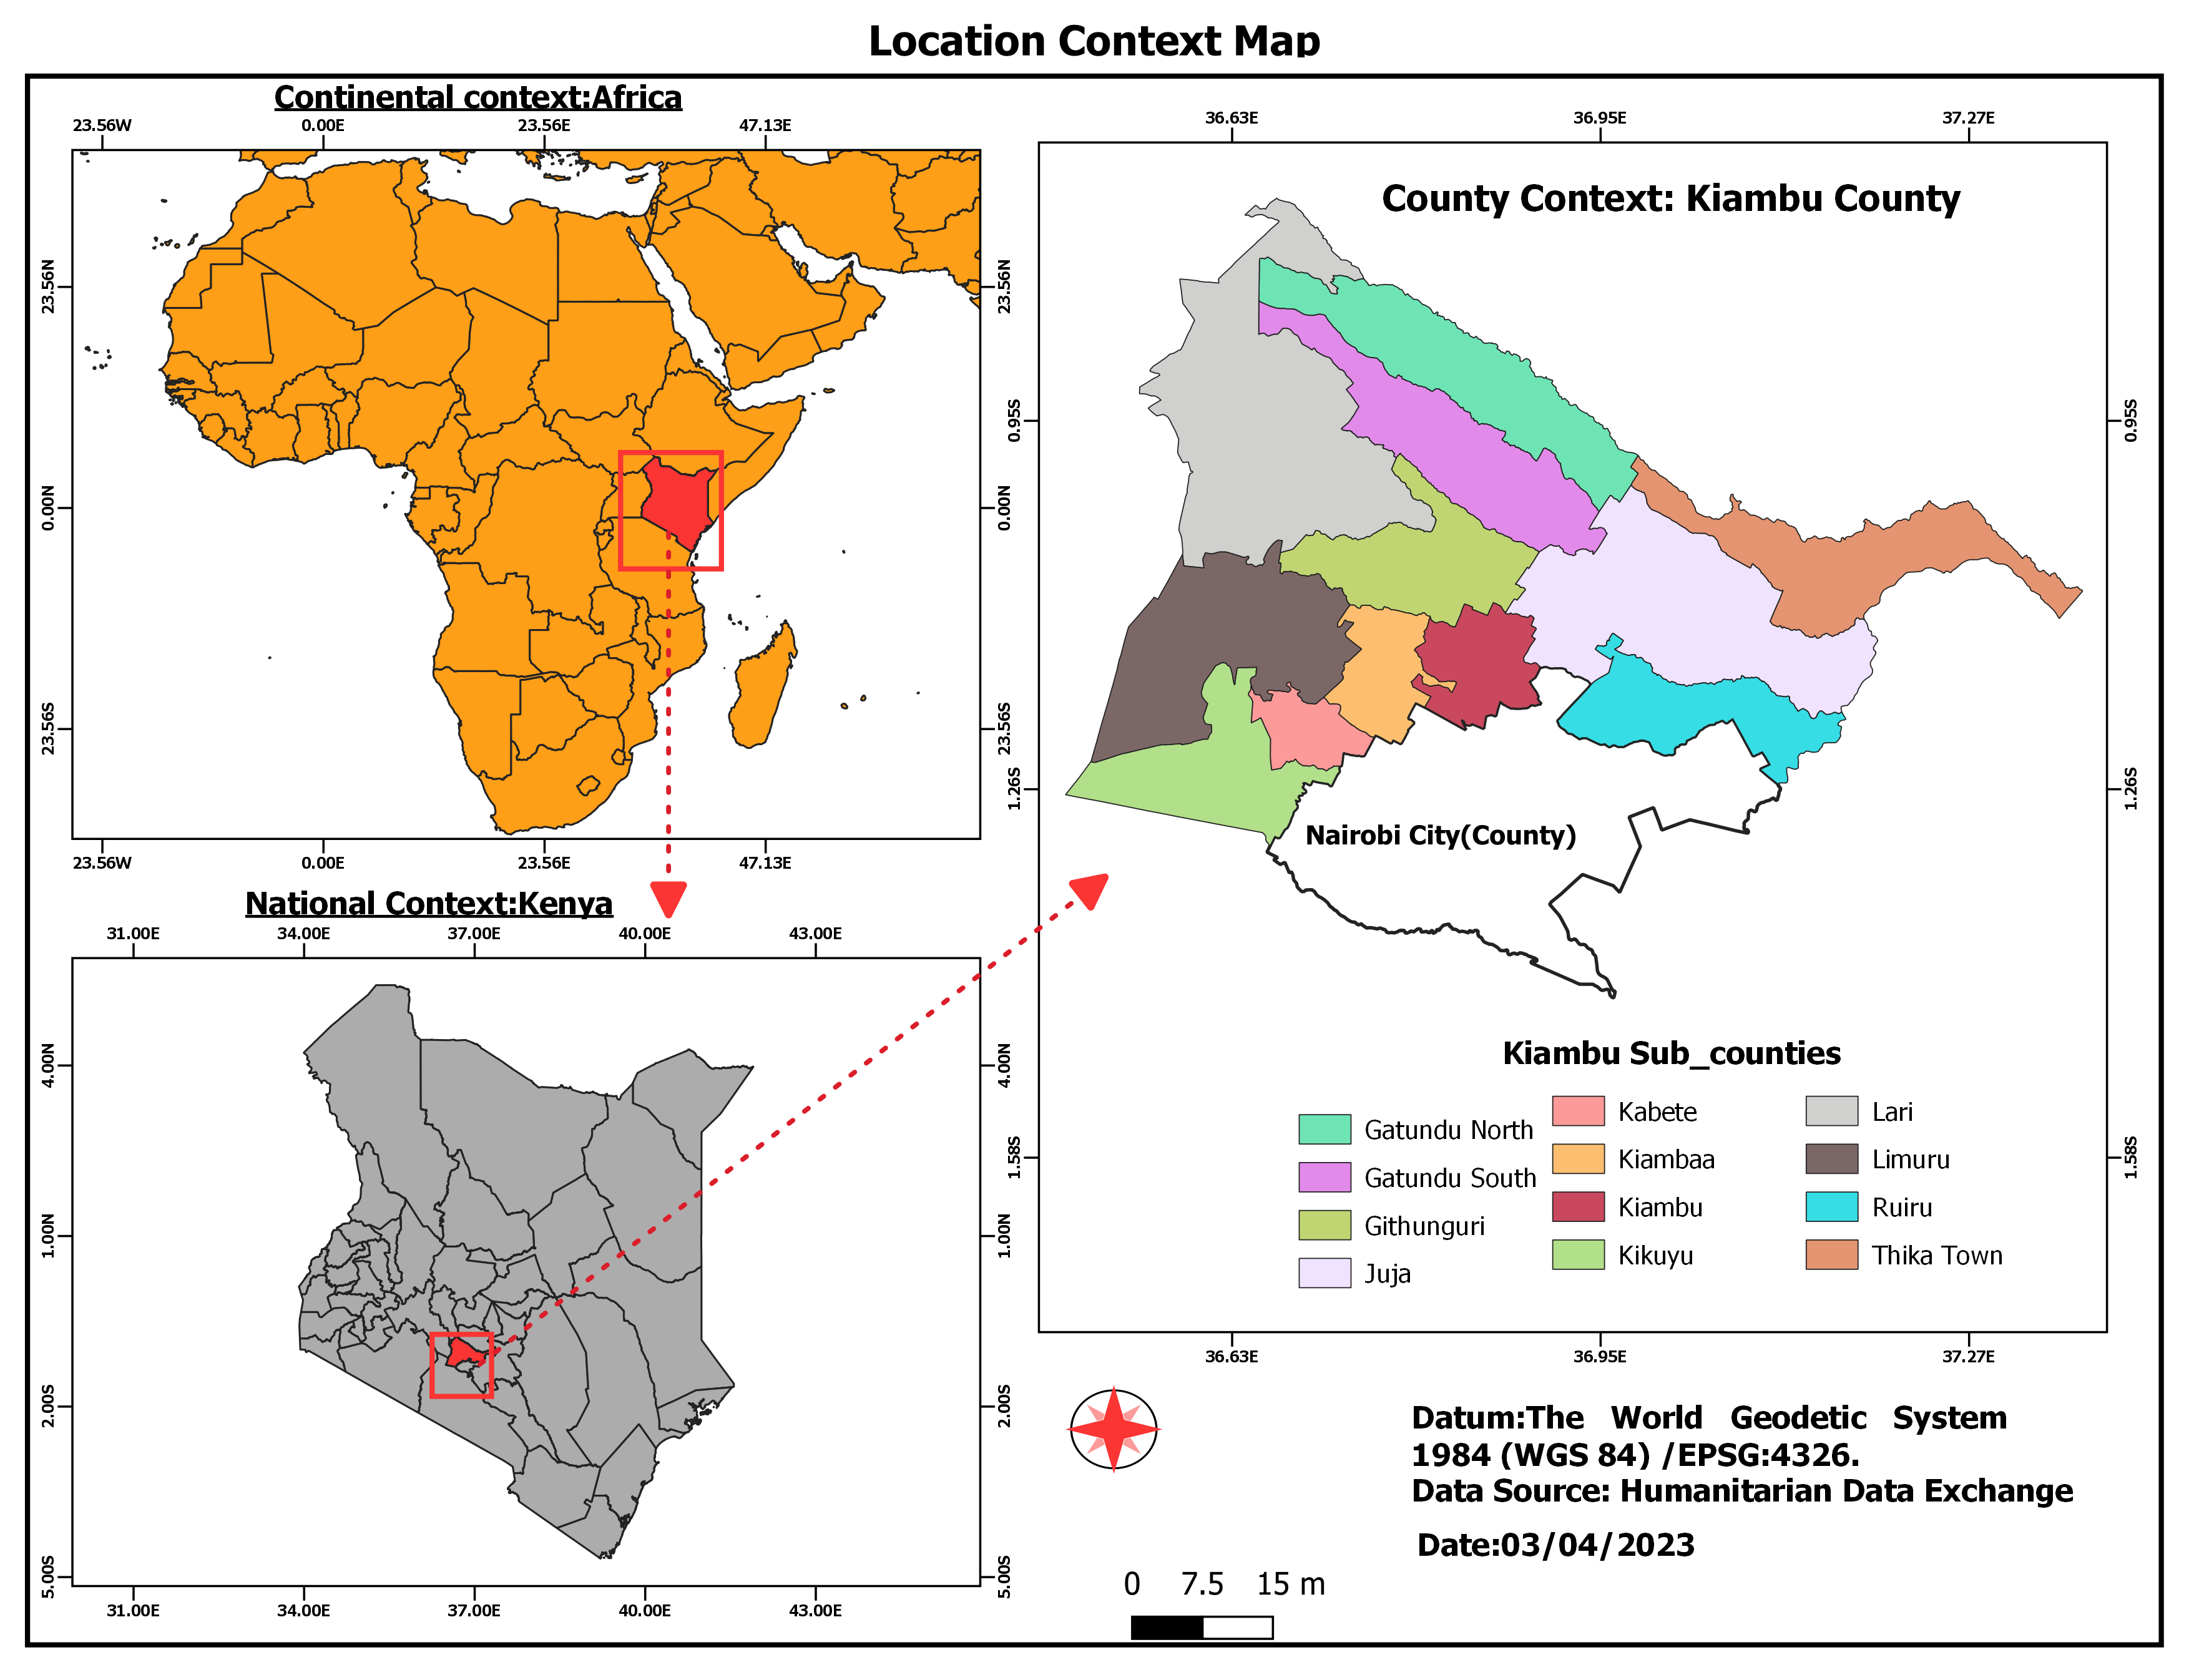 LOCATIONAL CONTEXT MAP FOR KIAMBU COUNTY